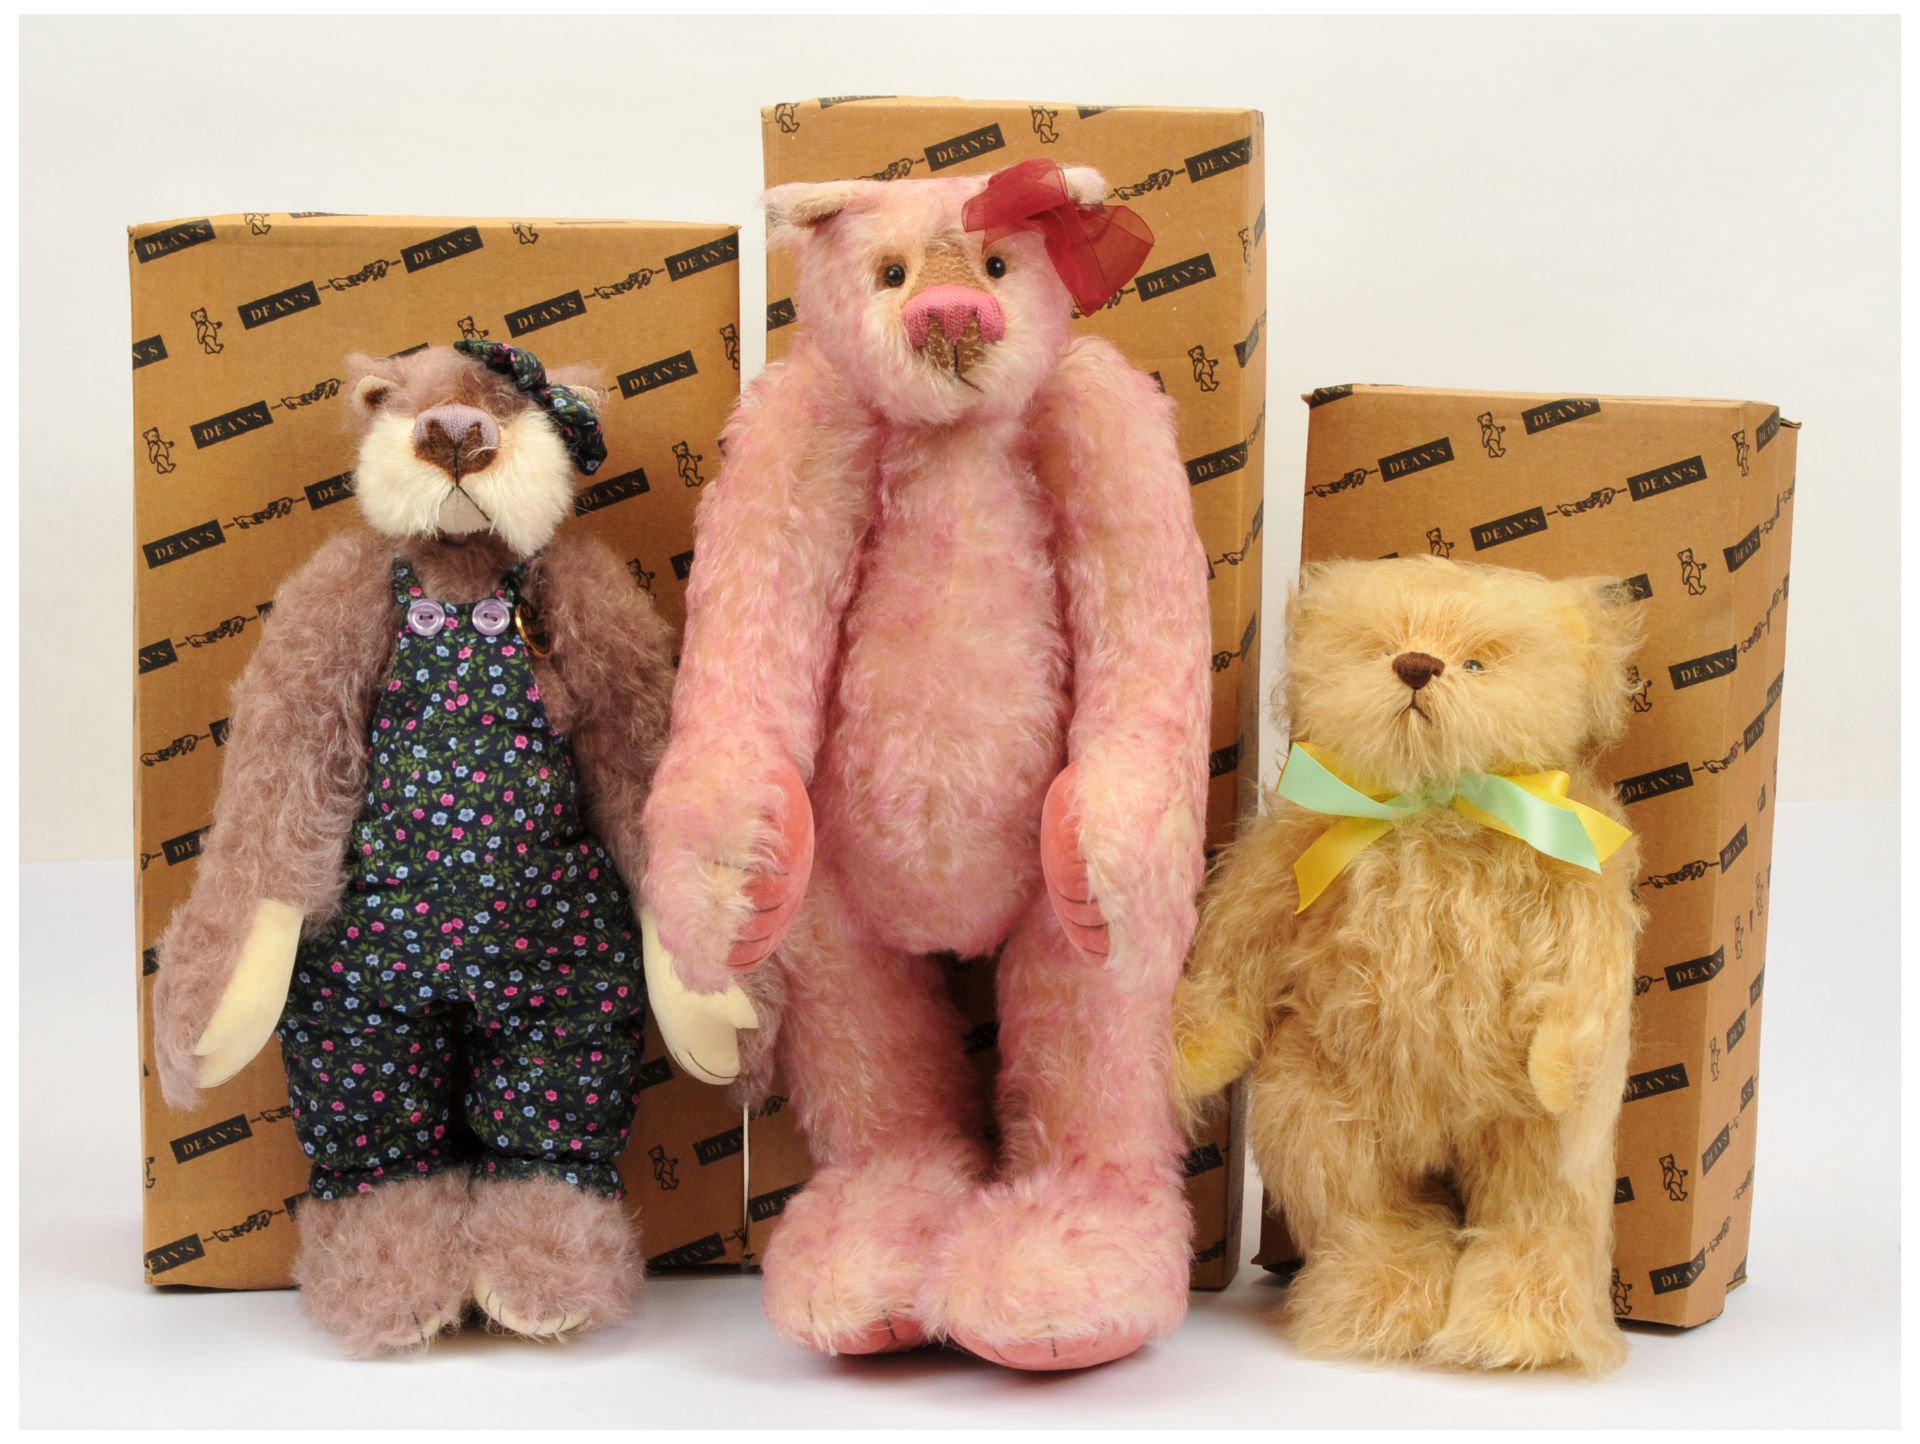 Dean's Rag Book trio of teddy bears